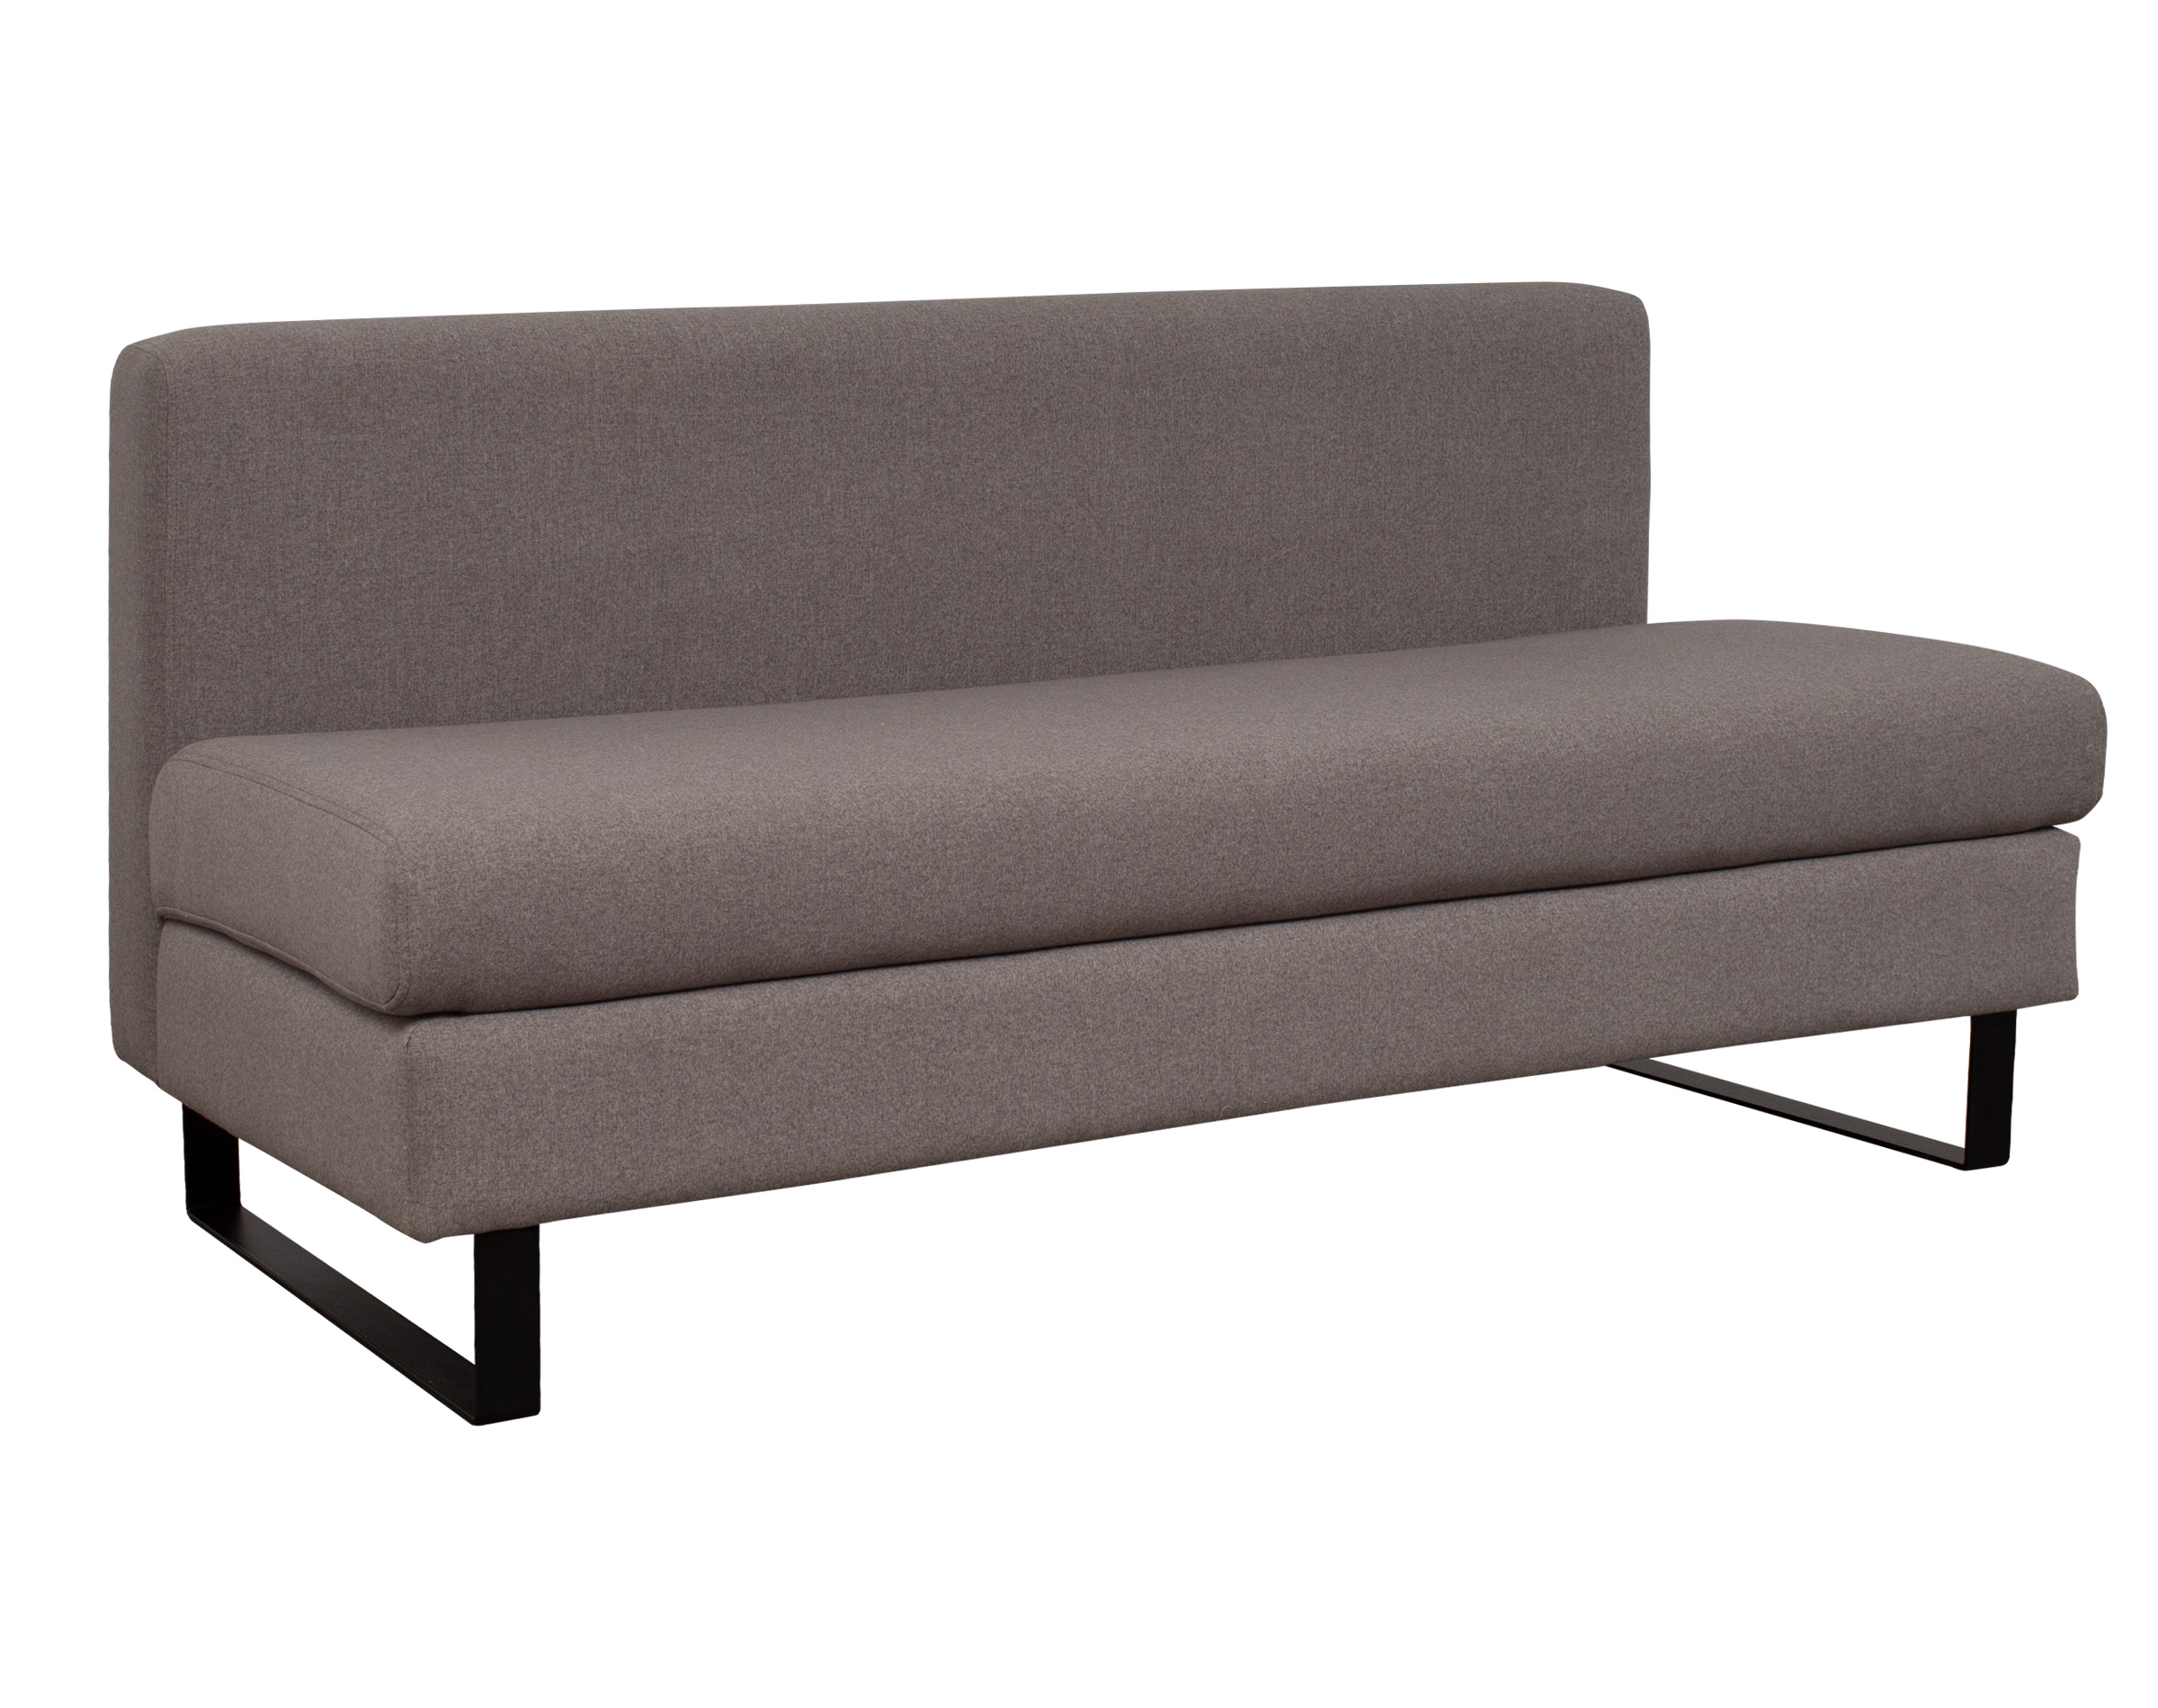 sofa empresa asiento pegado tela vv27 y zocalo metalico negro iso